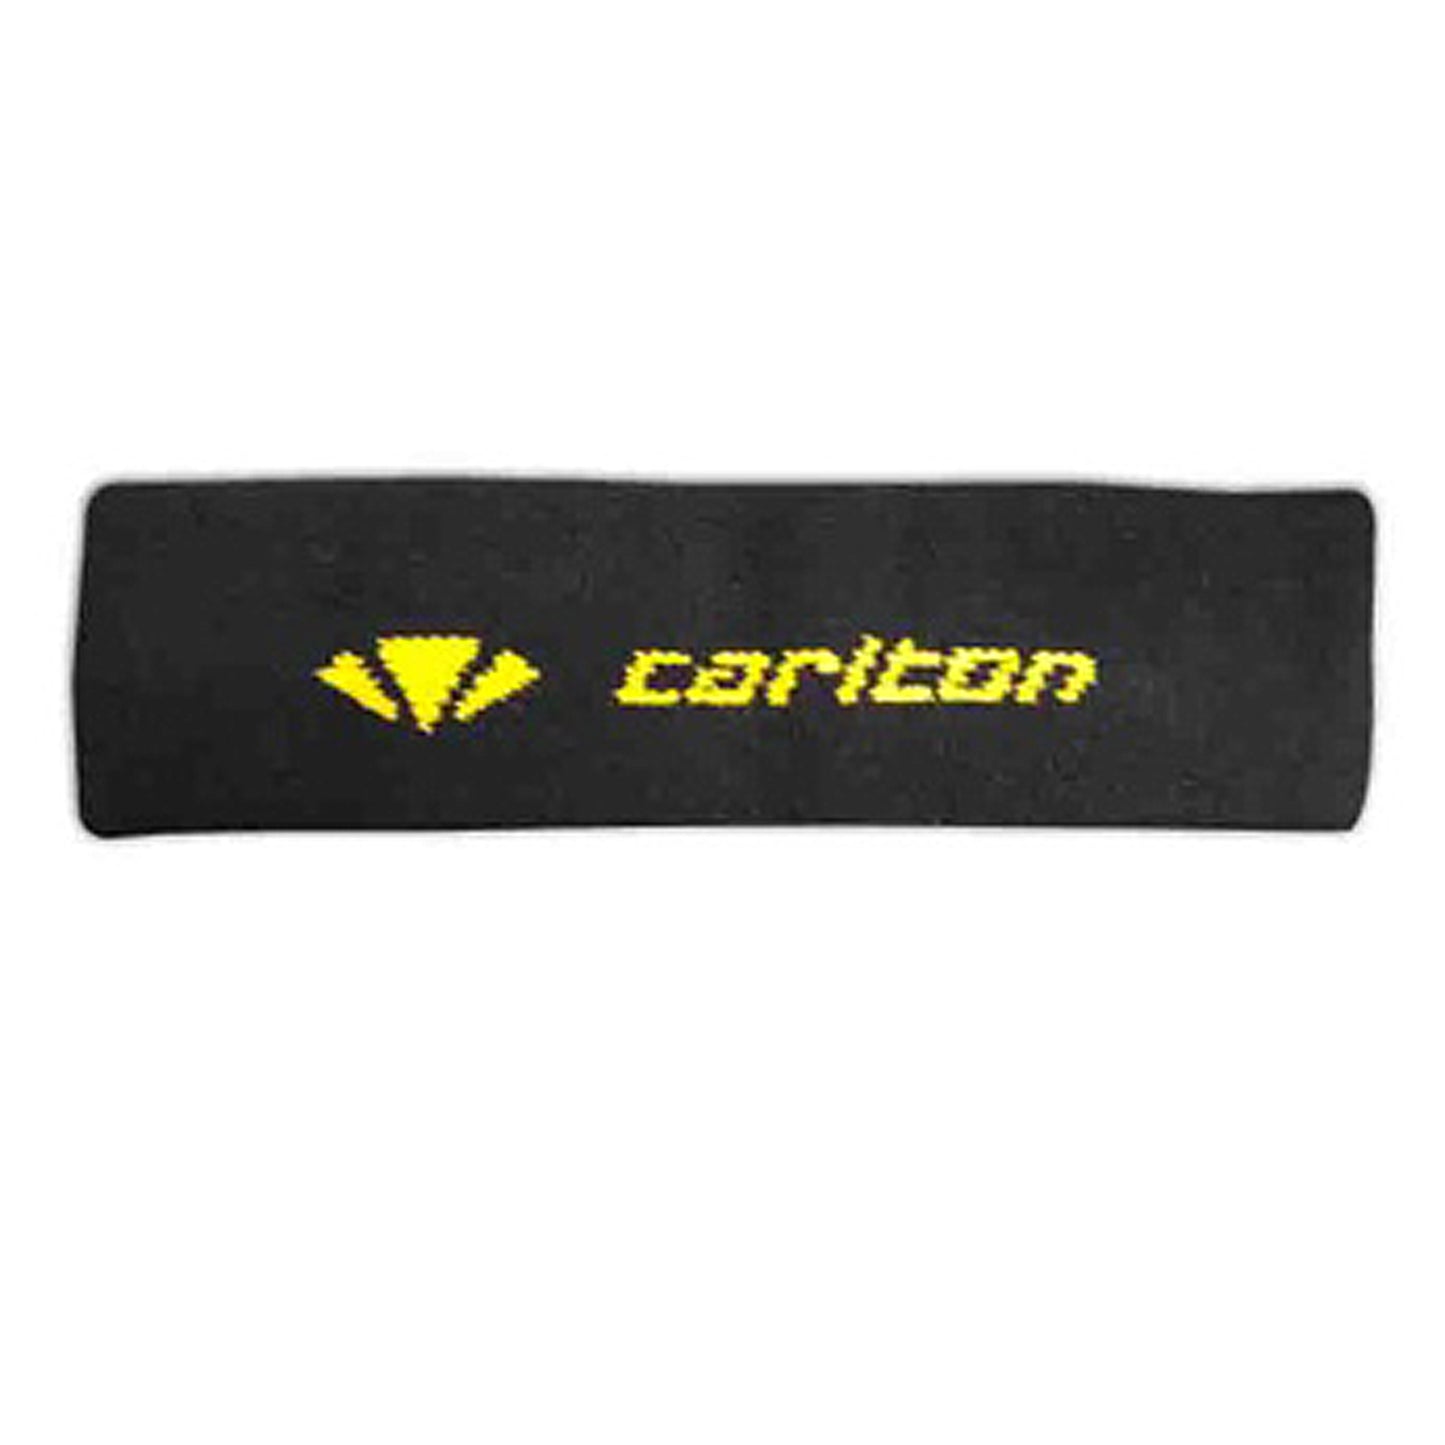 Carlton Head Band, Black/Yellow - Best Price online Prokicksports.com